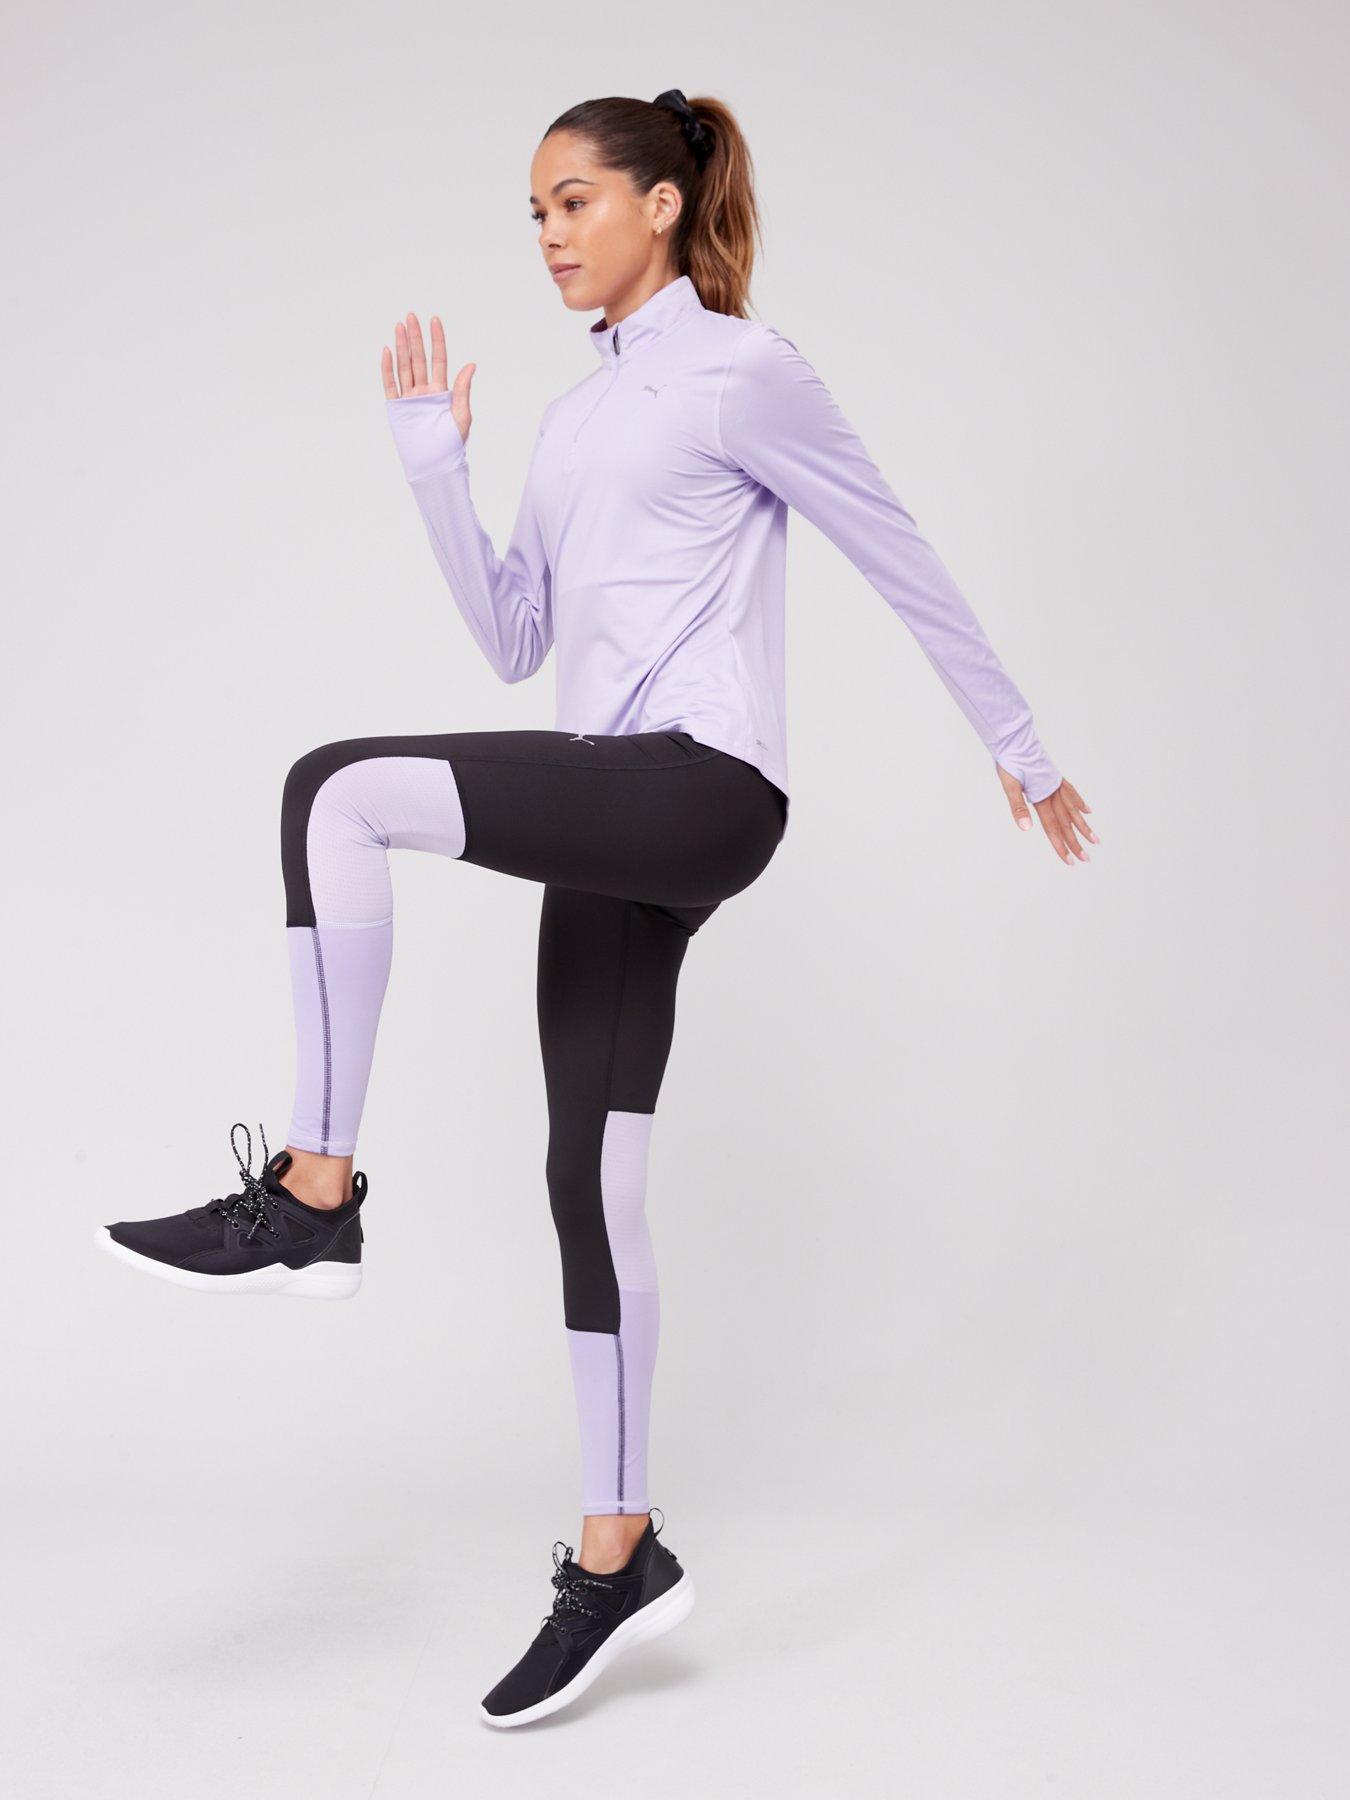 Nike Dri-FIT Women's Crew-Neck Running Top - Purple